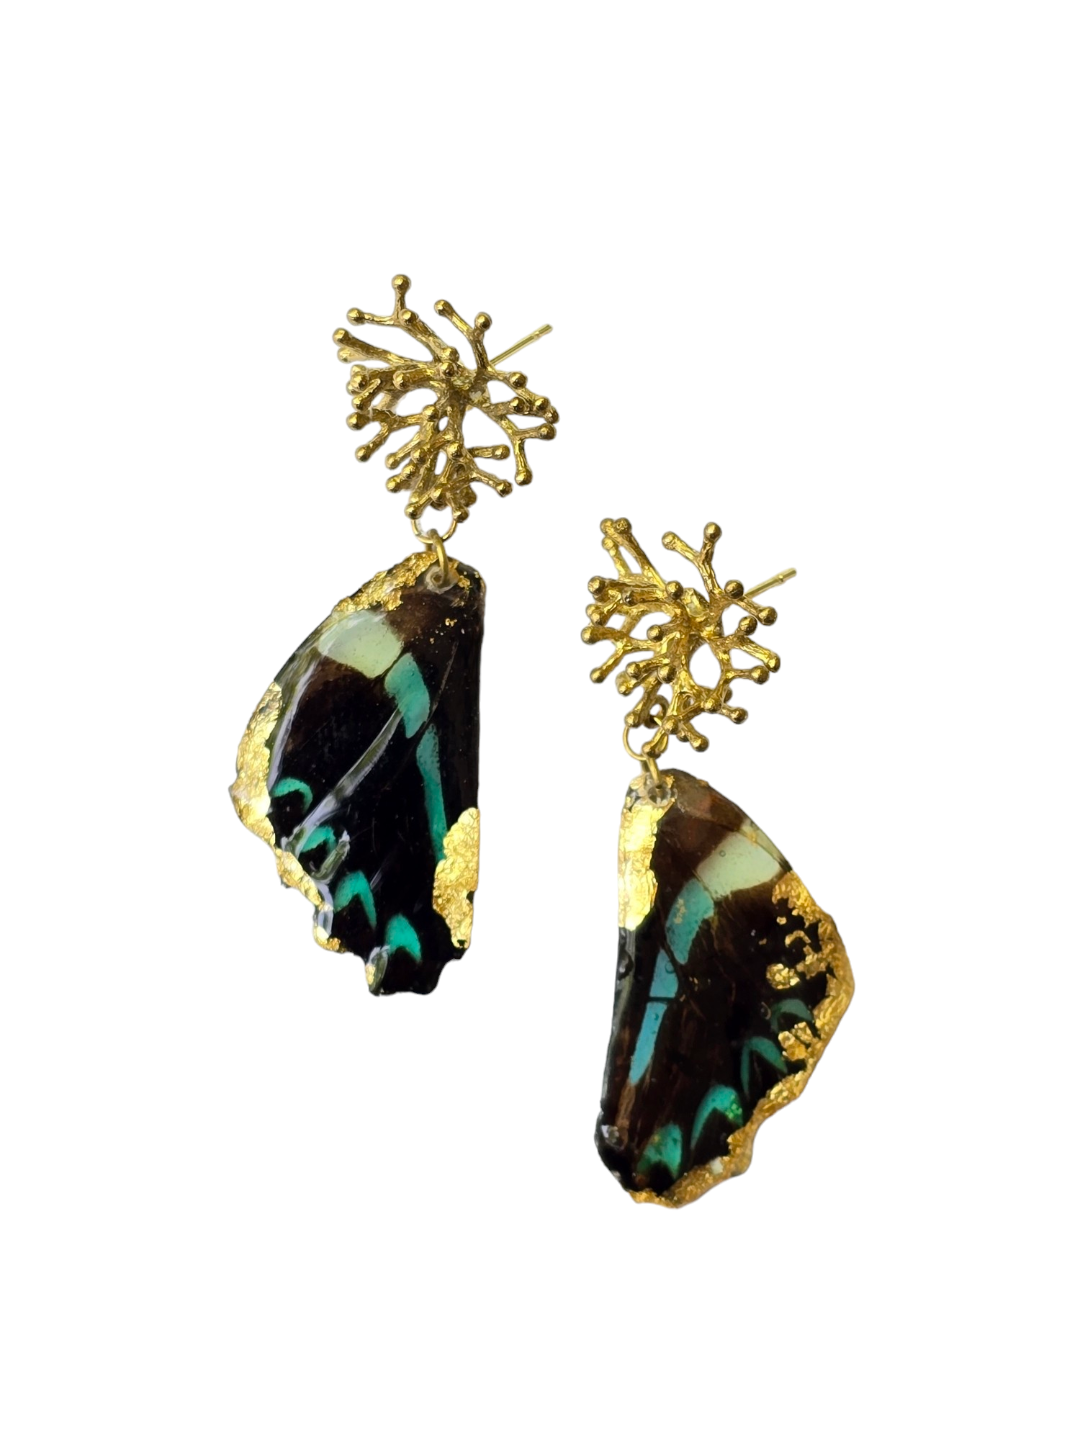 The Pheobe Real Butterfly Earrings